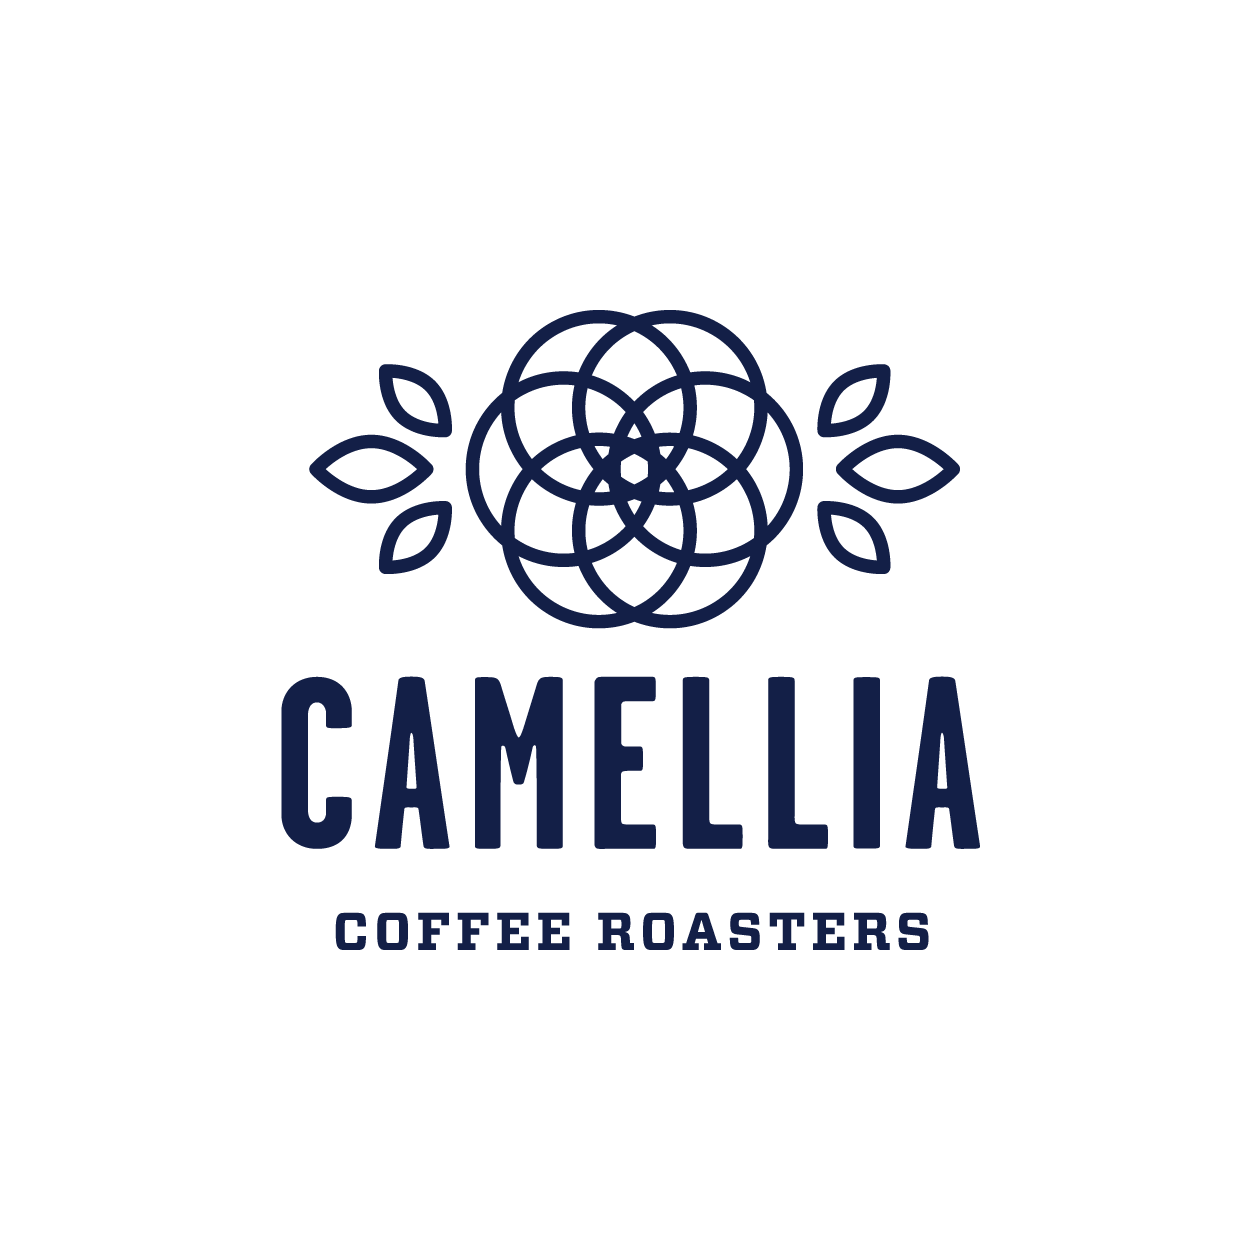  Camellia Coffee Roasters